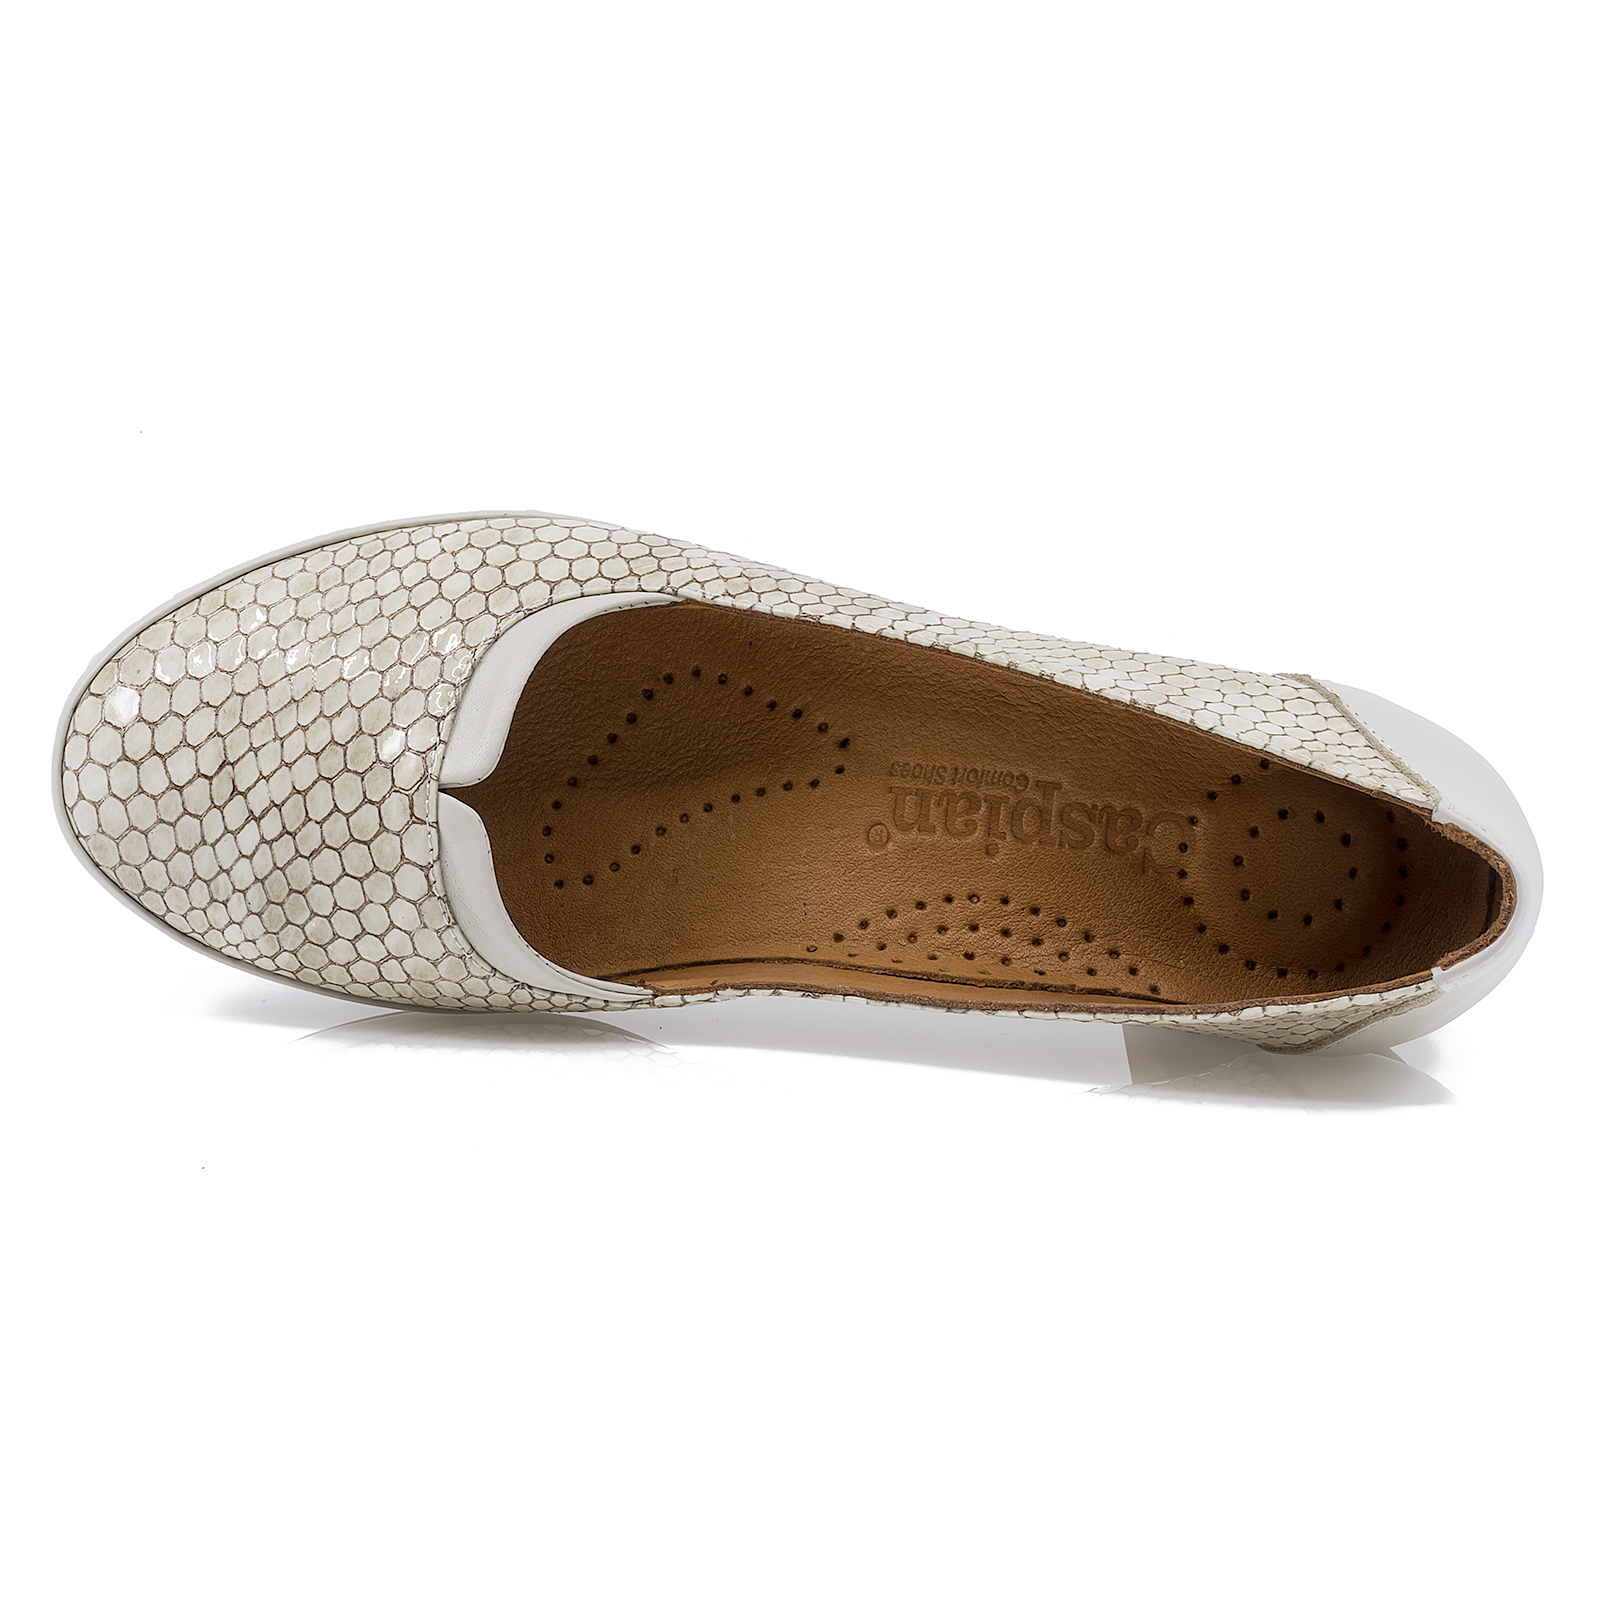 Pantofi-dama-Caspian-Cas-277-casual-piele-naturala-bej-lacuit-nouamoda.ro-3